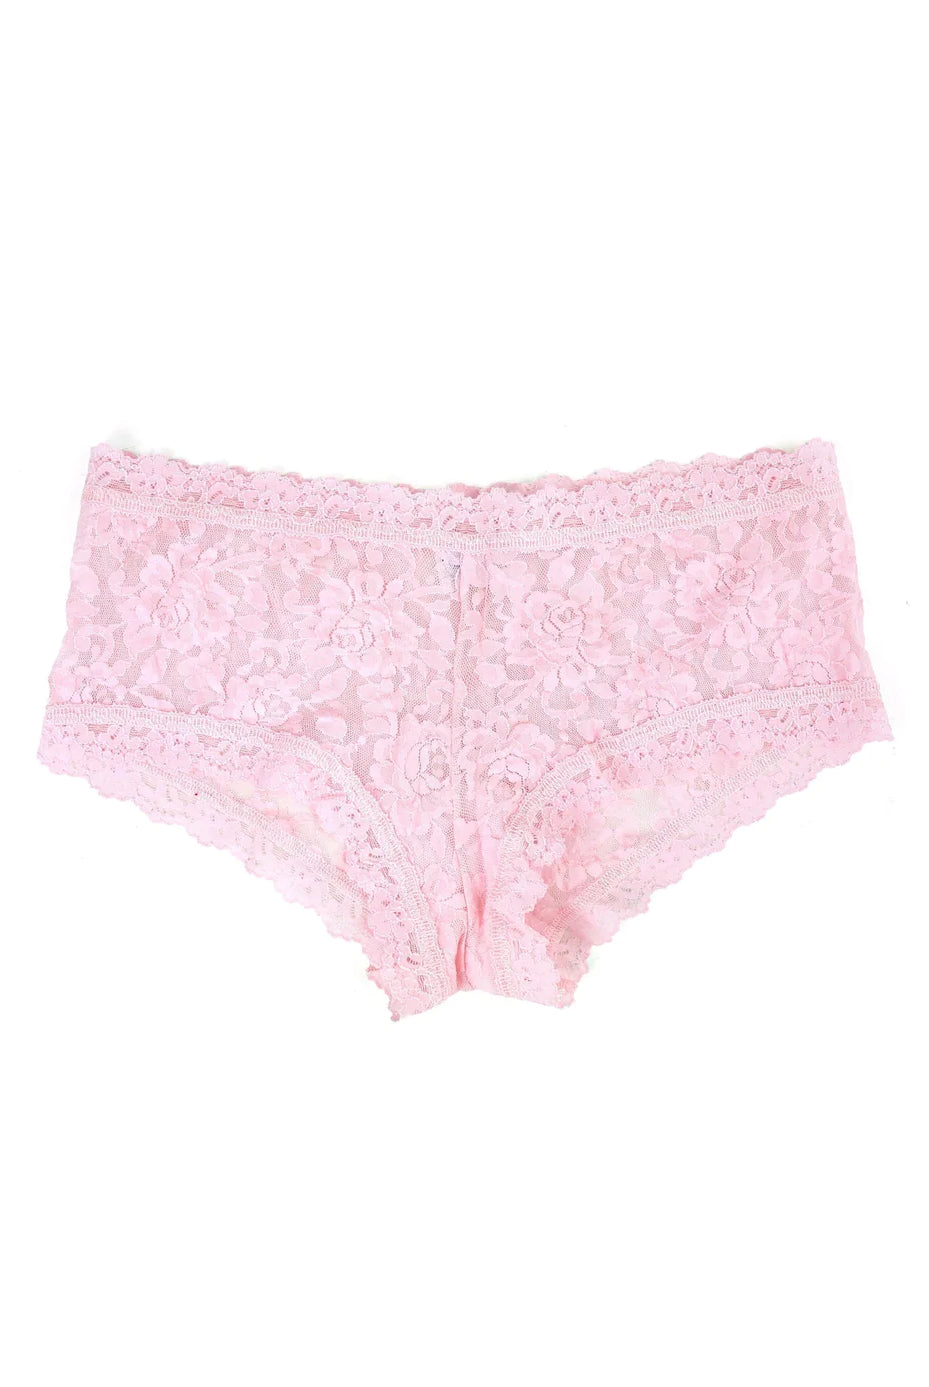 Signature Lace Boyshort - Bliss Pink - Flirt! Luxe Lingerie & Sleepwear